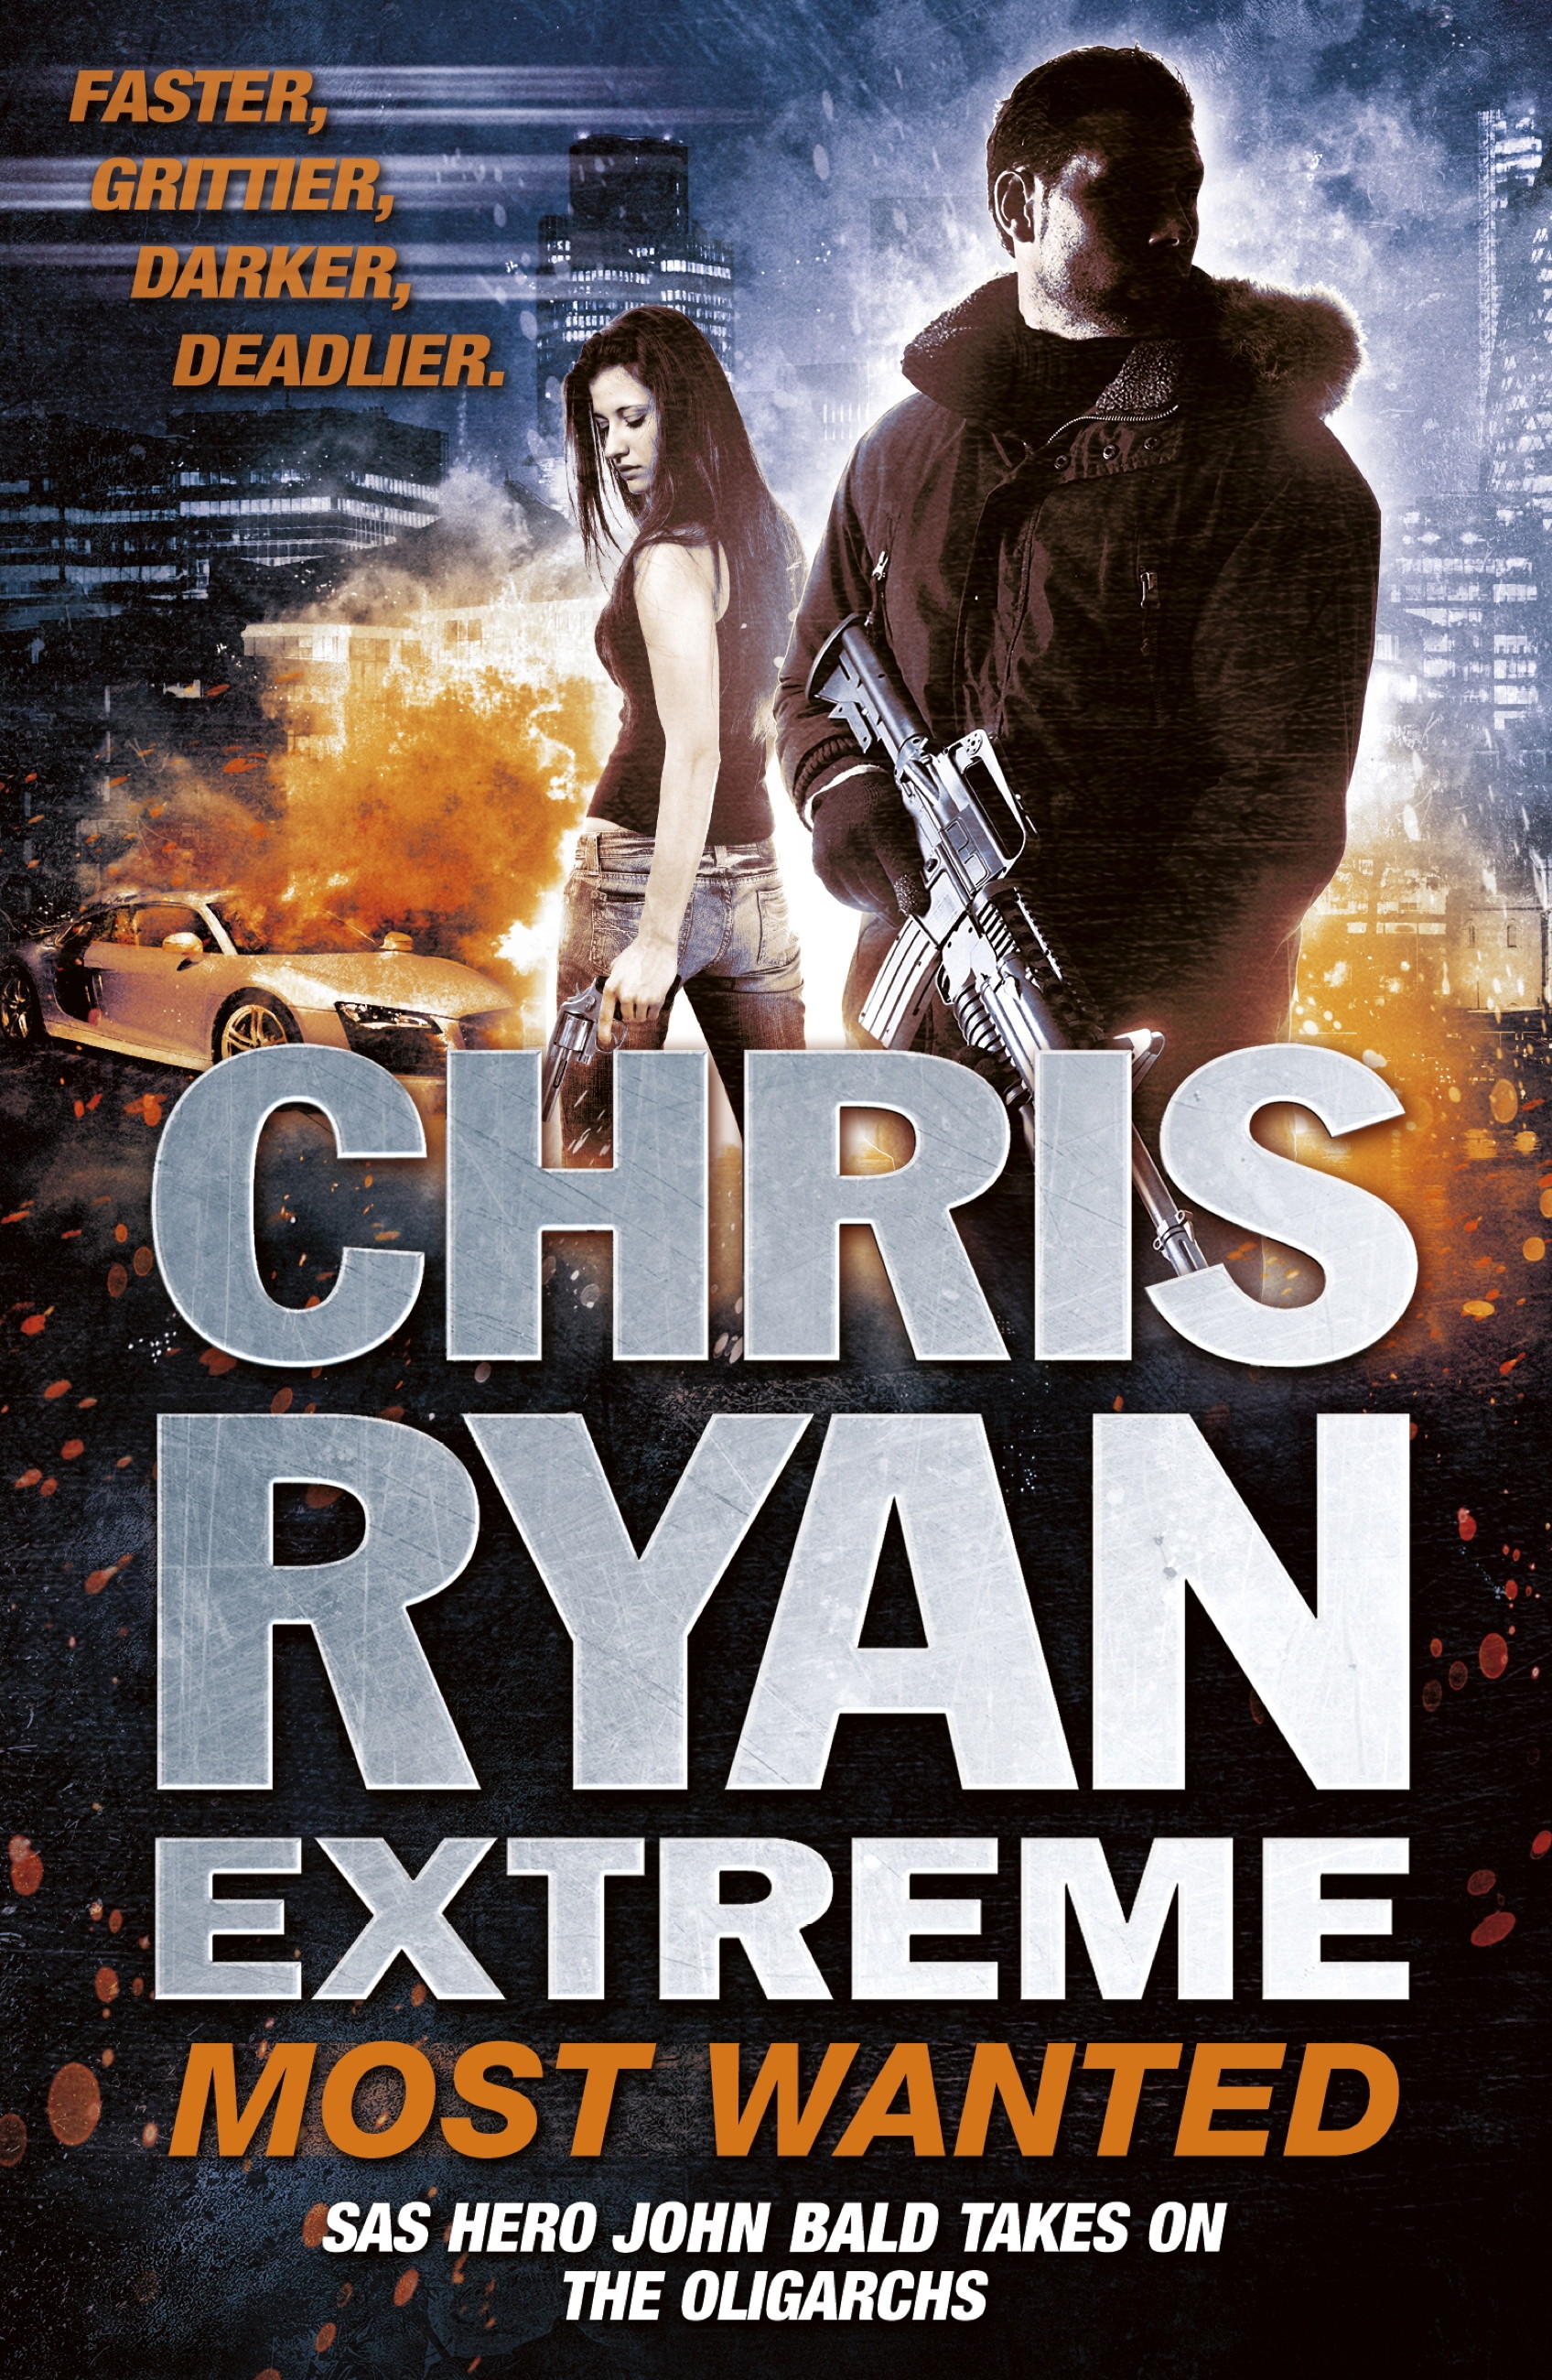 Dark fast. Chris Ryan the book. Chris Ryan the Kill Zone. The most extreme.